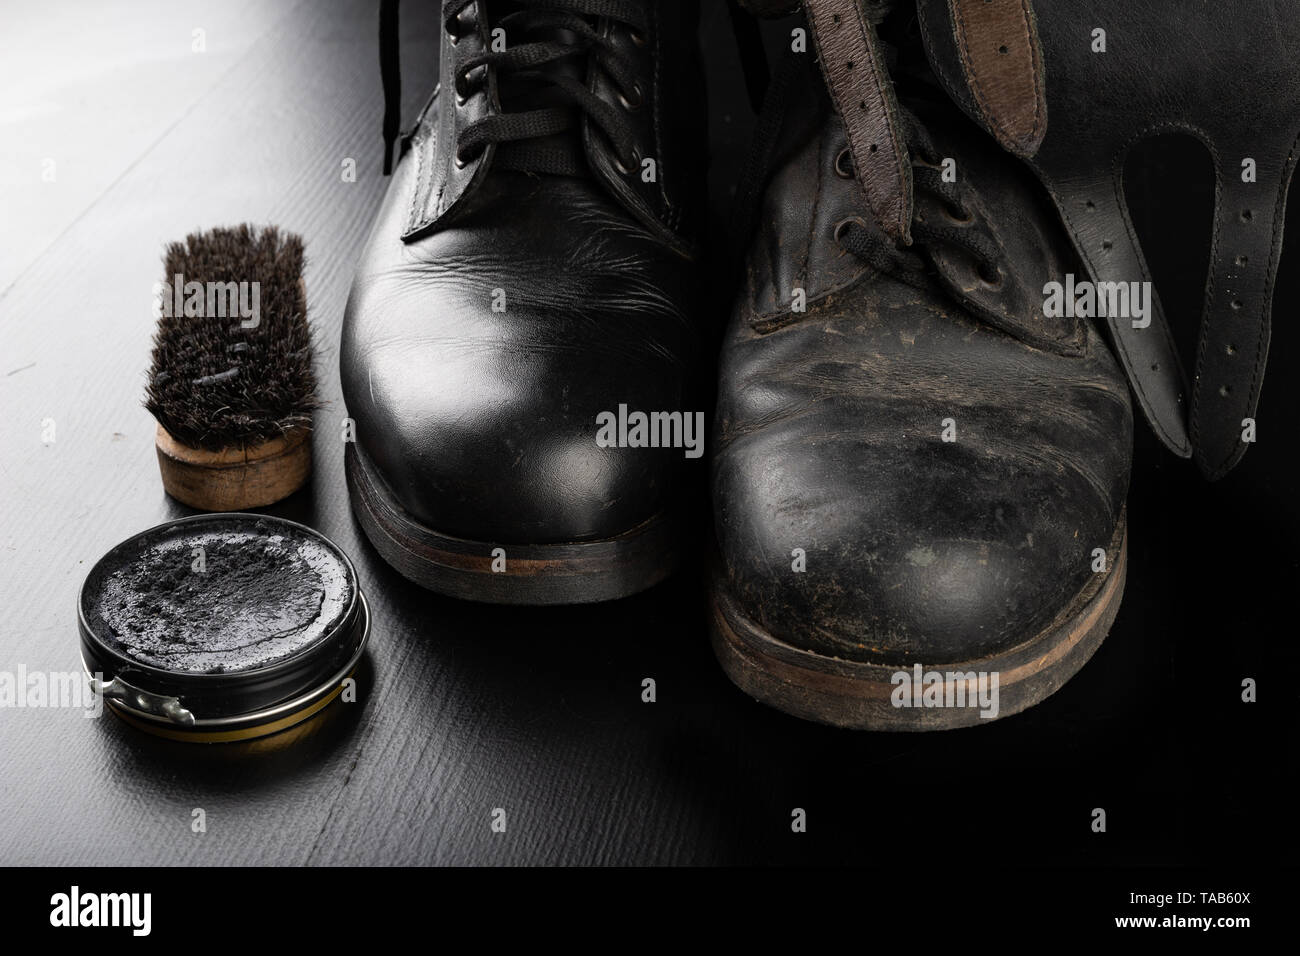 military shoe polish